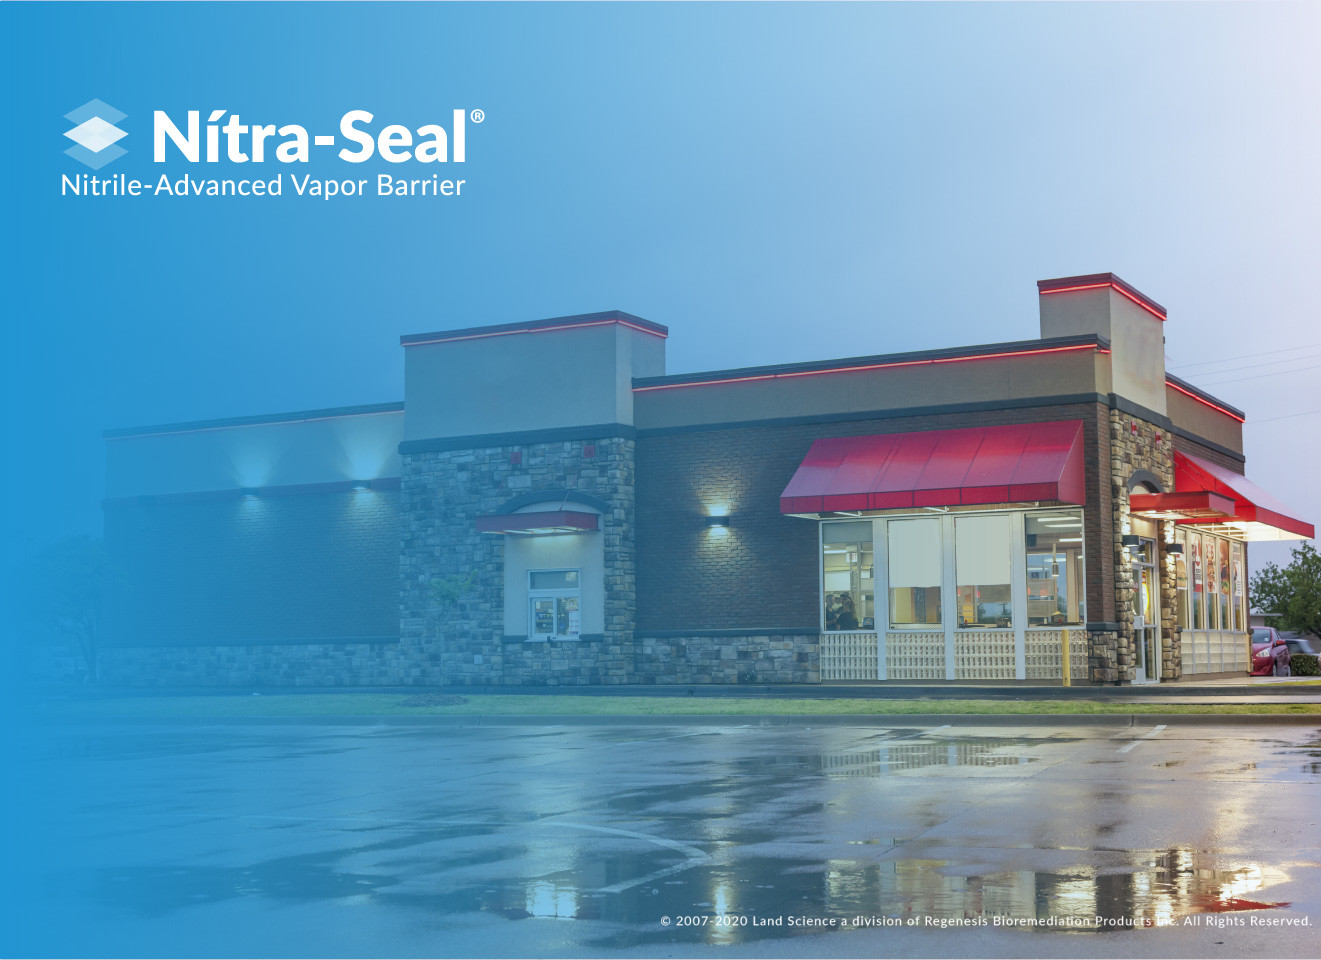 Nitra-Seal Facilitates National Restaurant Chain Expansion into Growing Texas Market